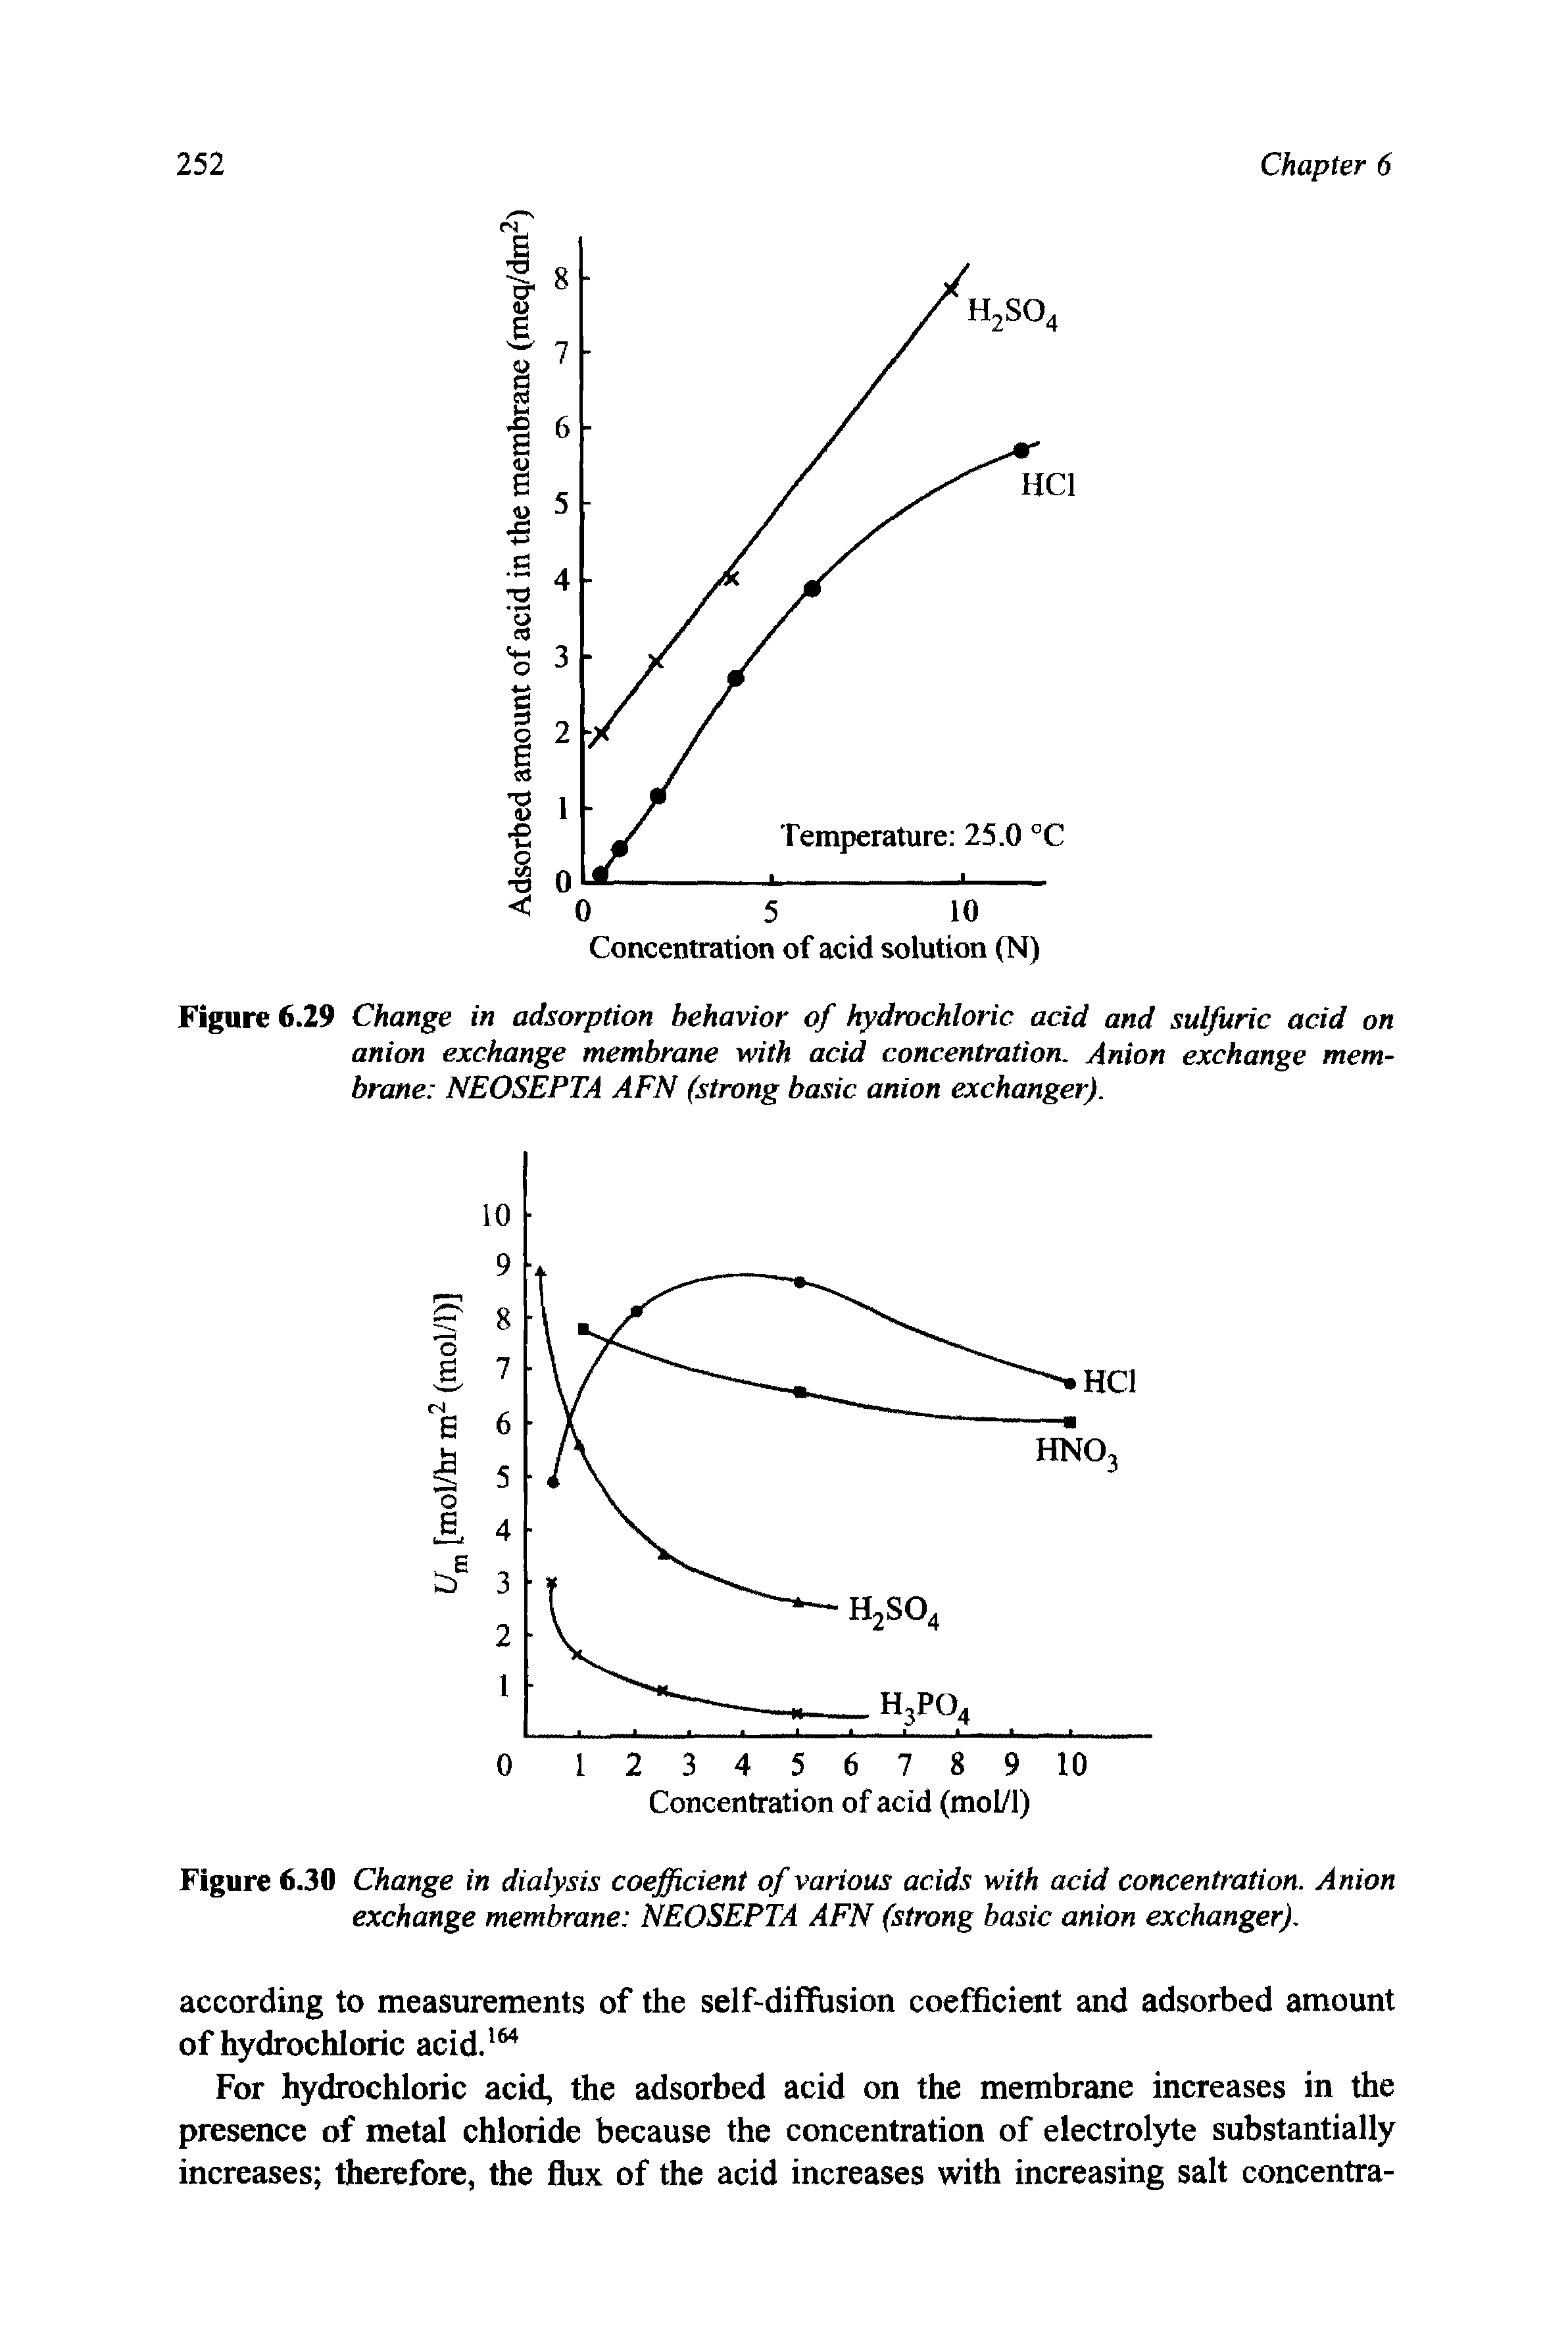 Figure 6.29 Change in adsorption behavior of hydrochloric acid and sulfuric acid on anion exchange membrane with acid concentration. Anion exchange membrane NEOSEPTA AFN (strong basic anion exchanger).